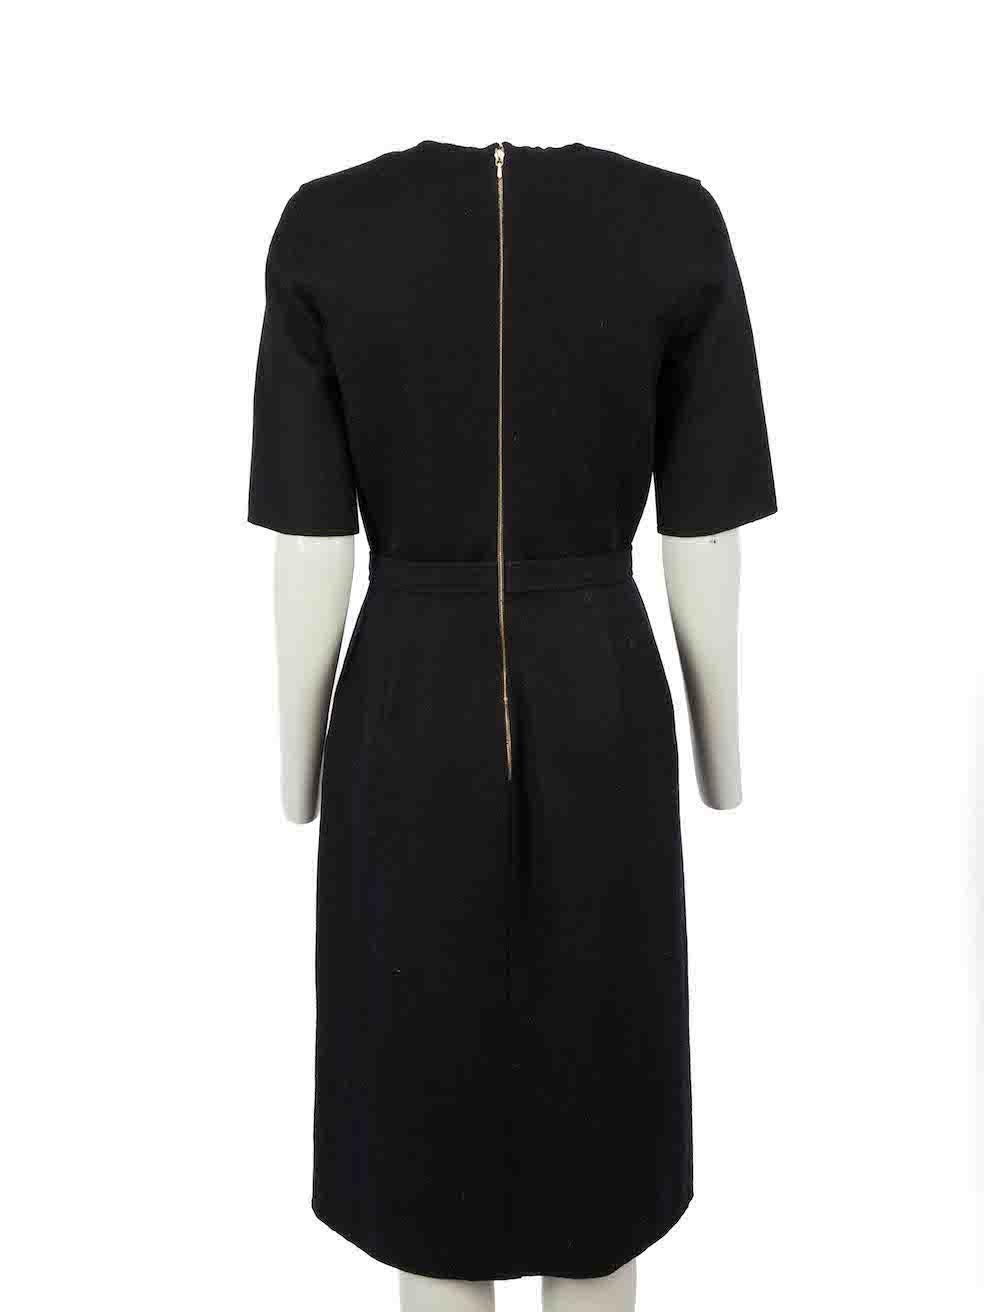 Black Victoria Beckham Victoria Victoria Beckham Navy Wool Midi-Length Dress Size M